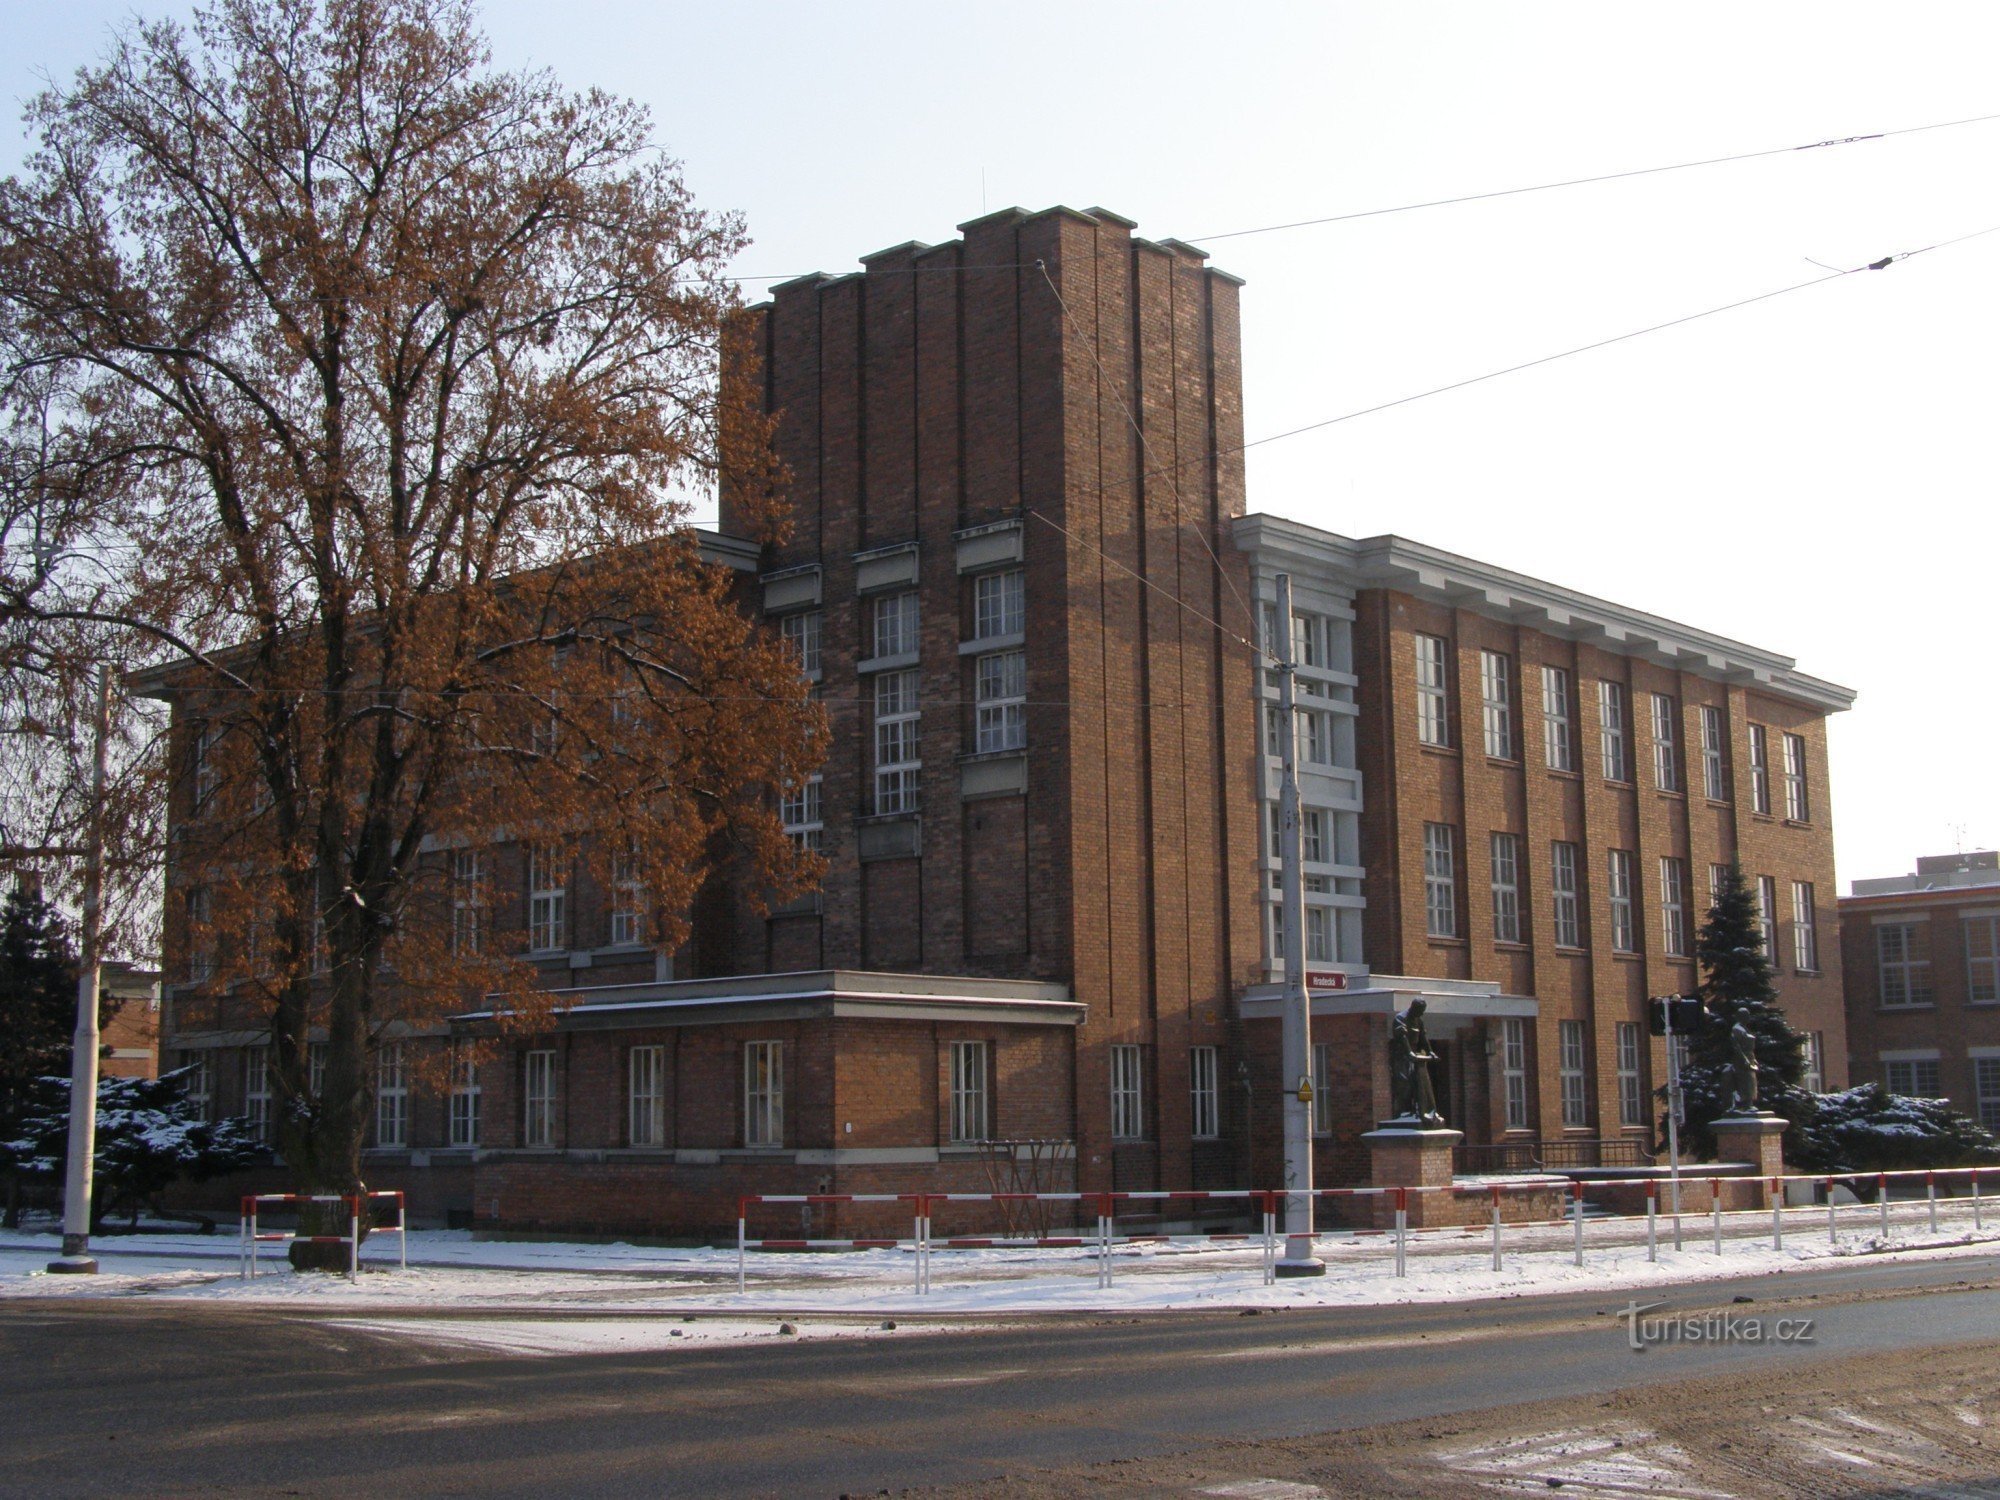 Градец Кралове - бывшая школа Кожелуж Гочара